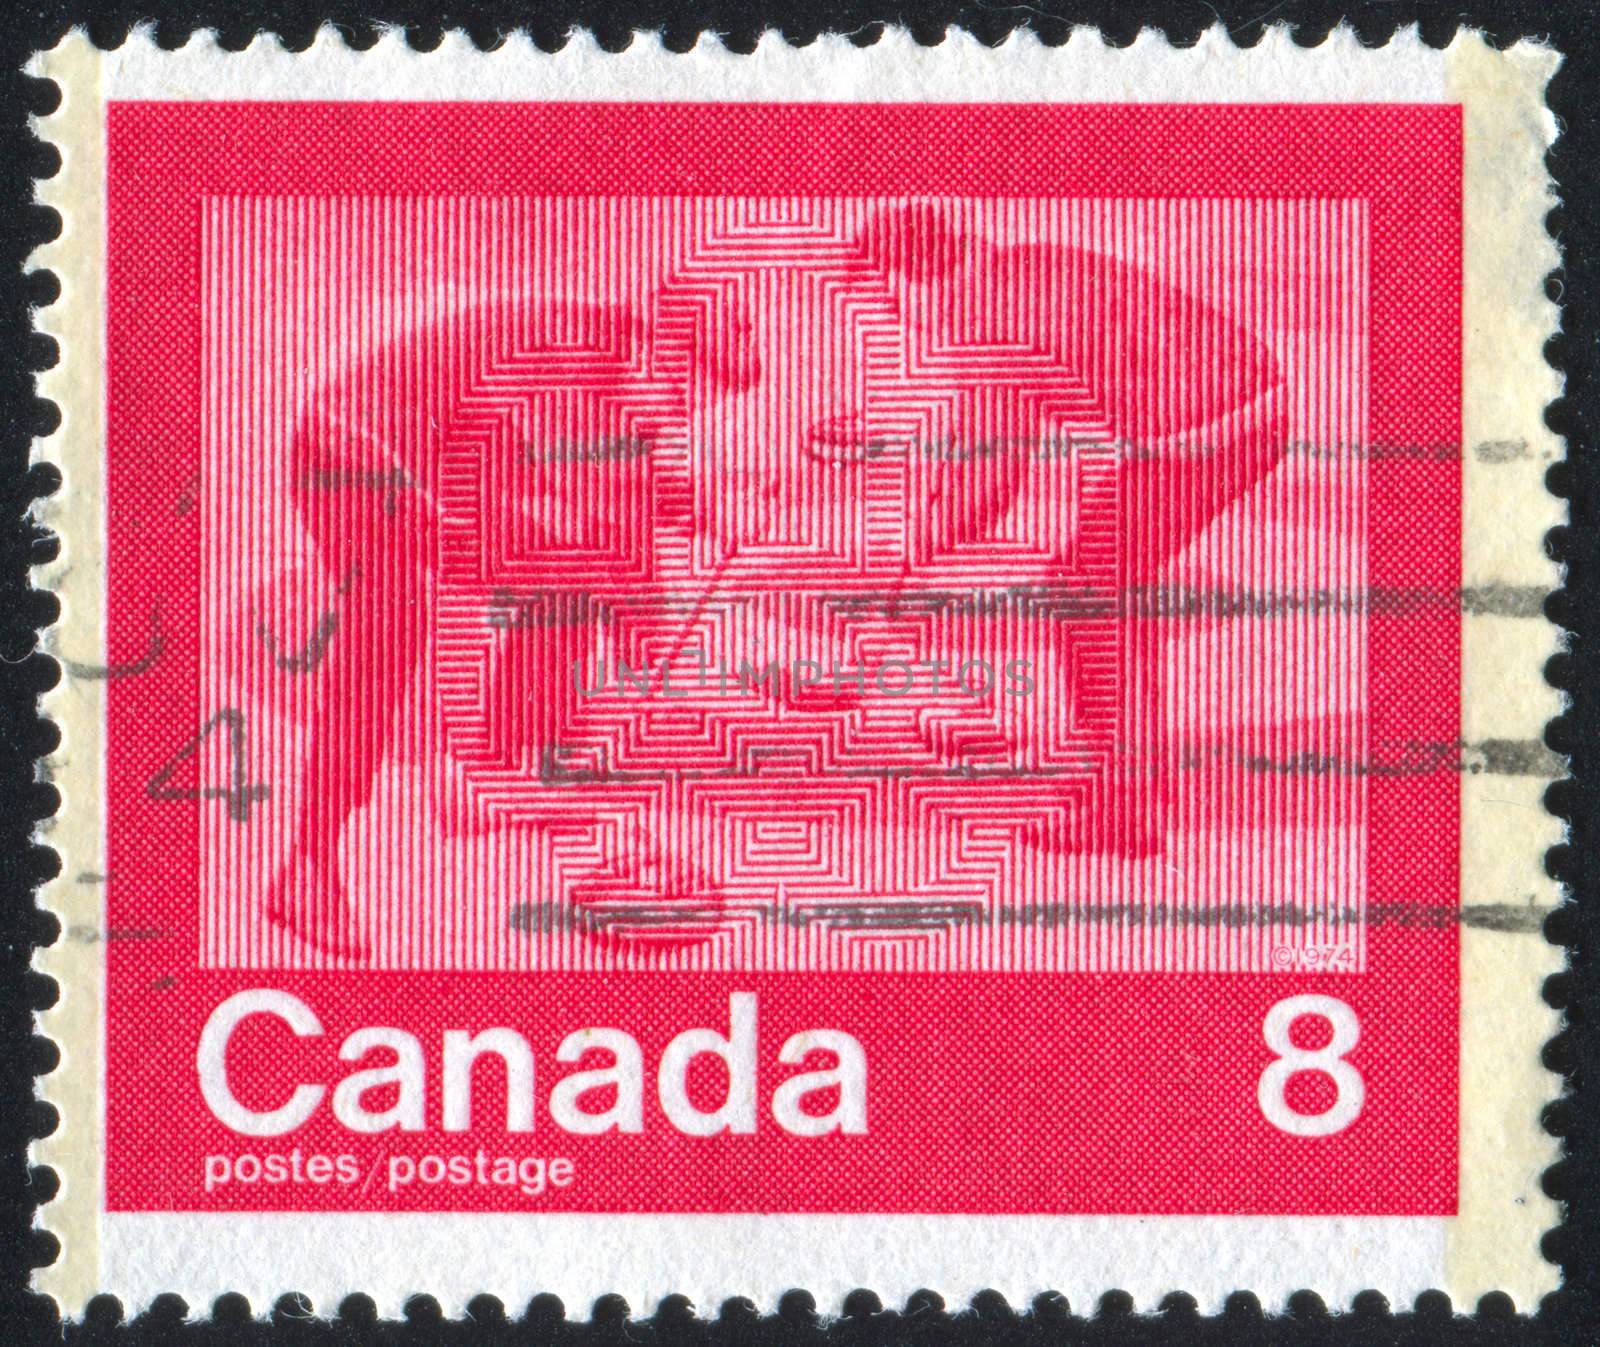 CANADA - CIRCA 1974: stamp printed by Canada, shows hockey, circa 1974